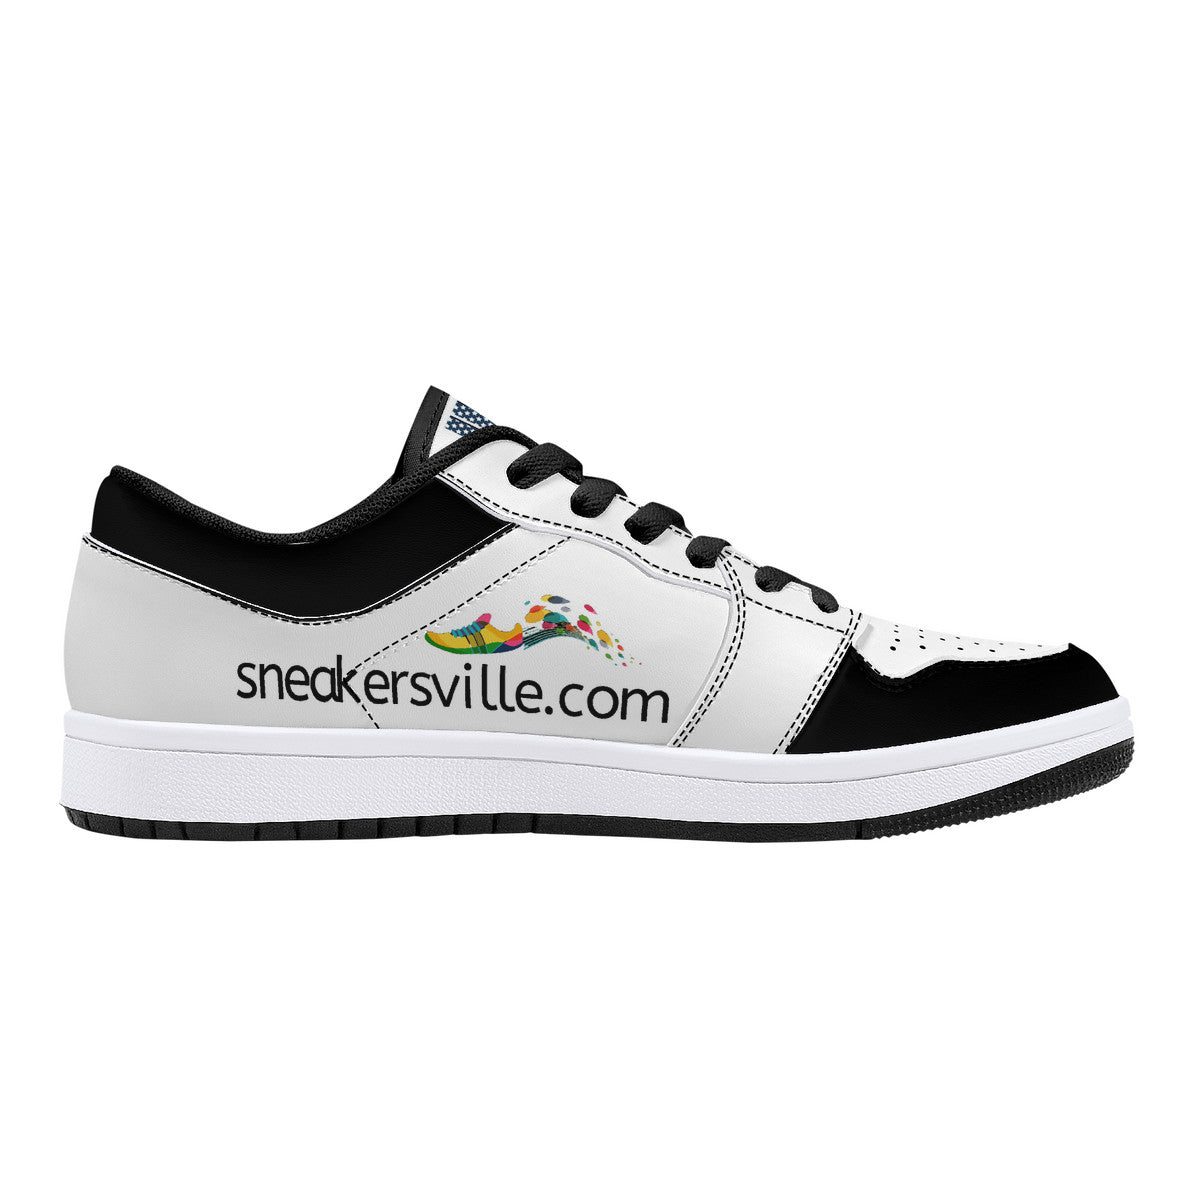 Leather Sneakers - sneakersville.com logo